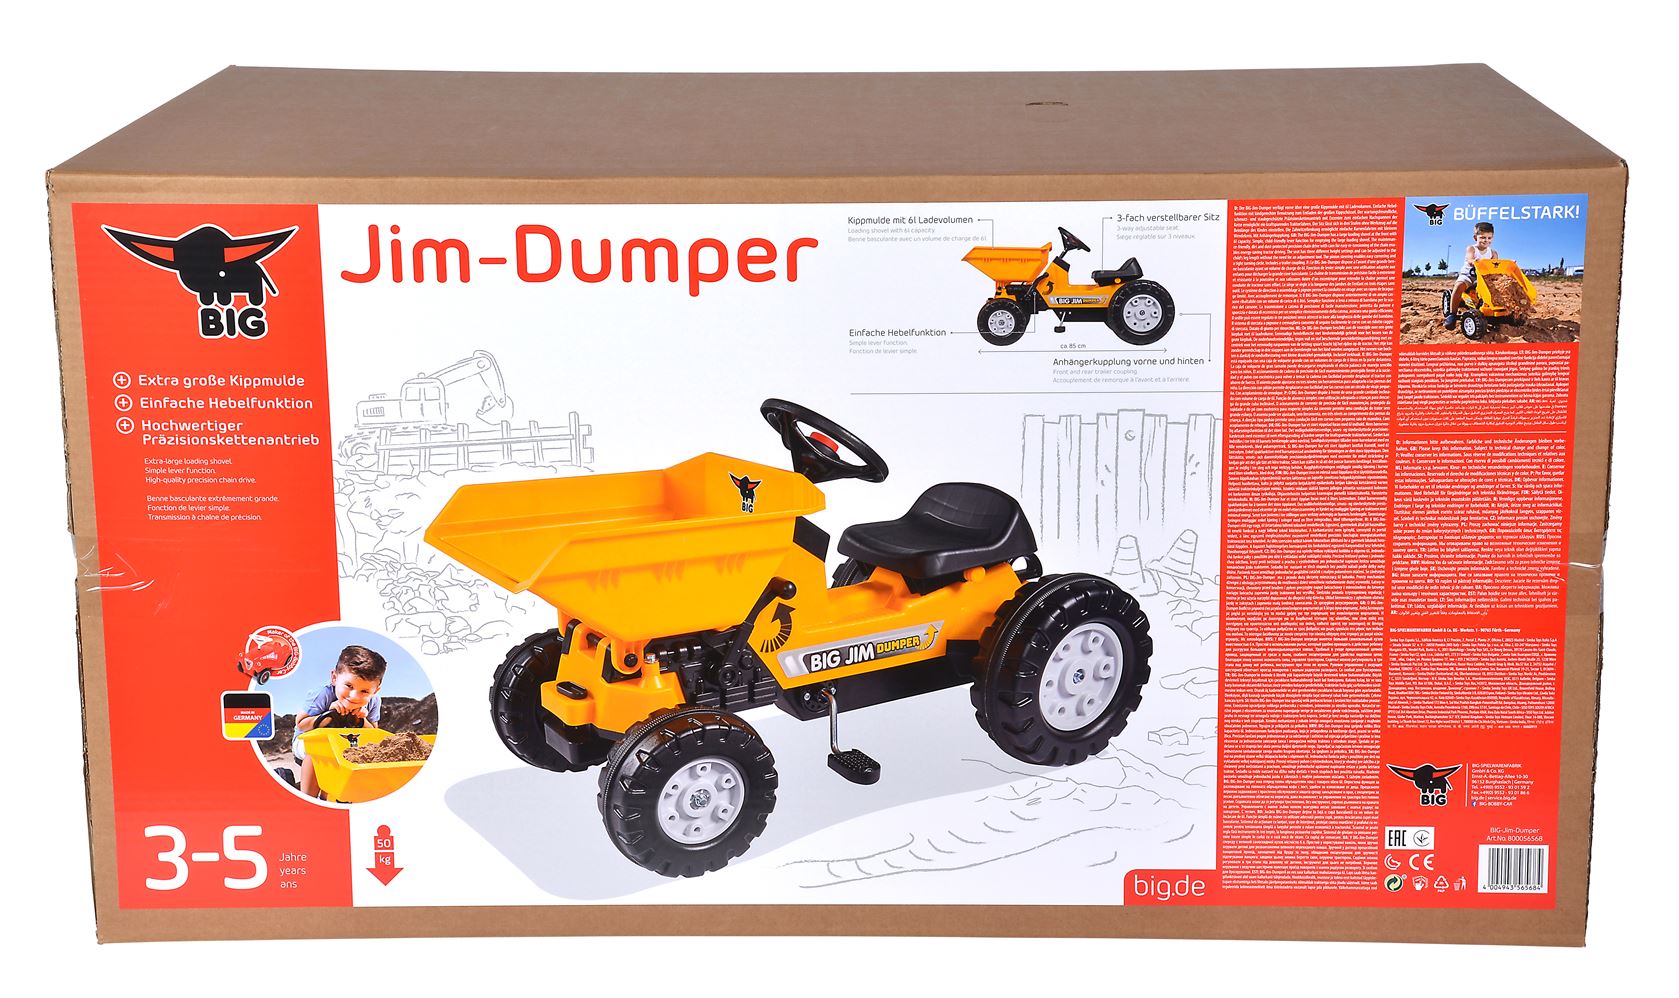 BIG-Jim-dumper-gronddumper-traptractor